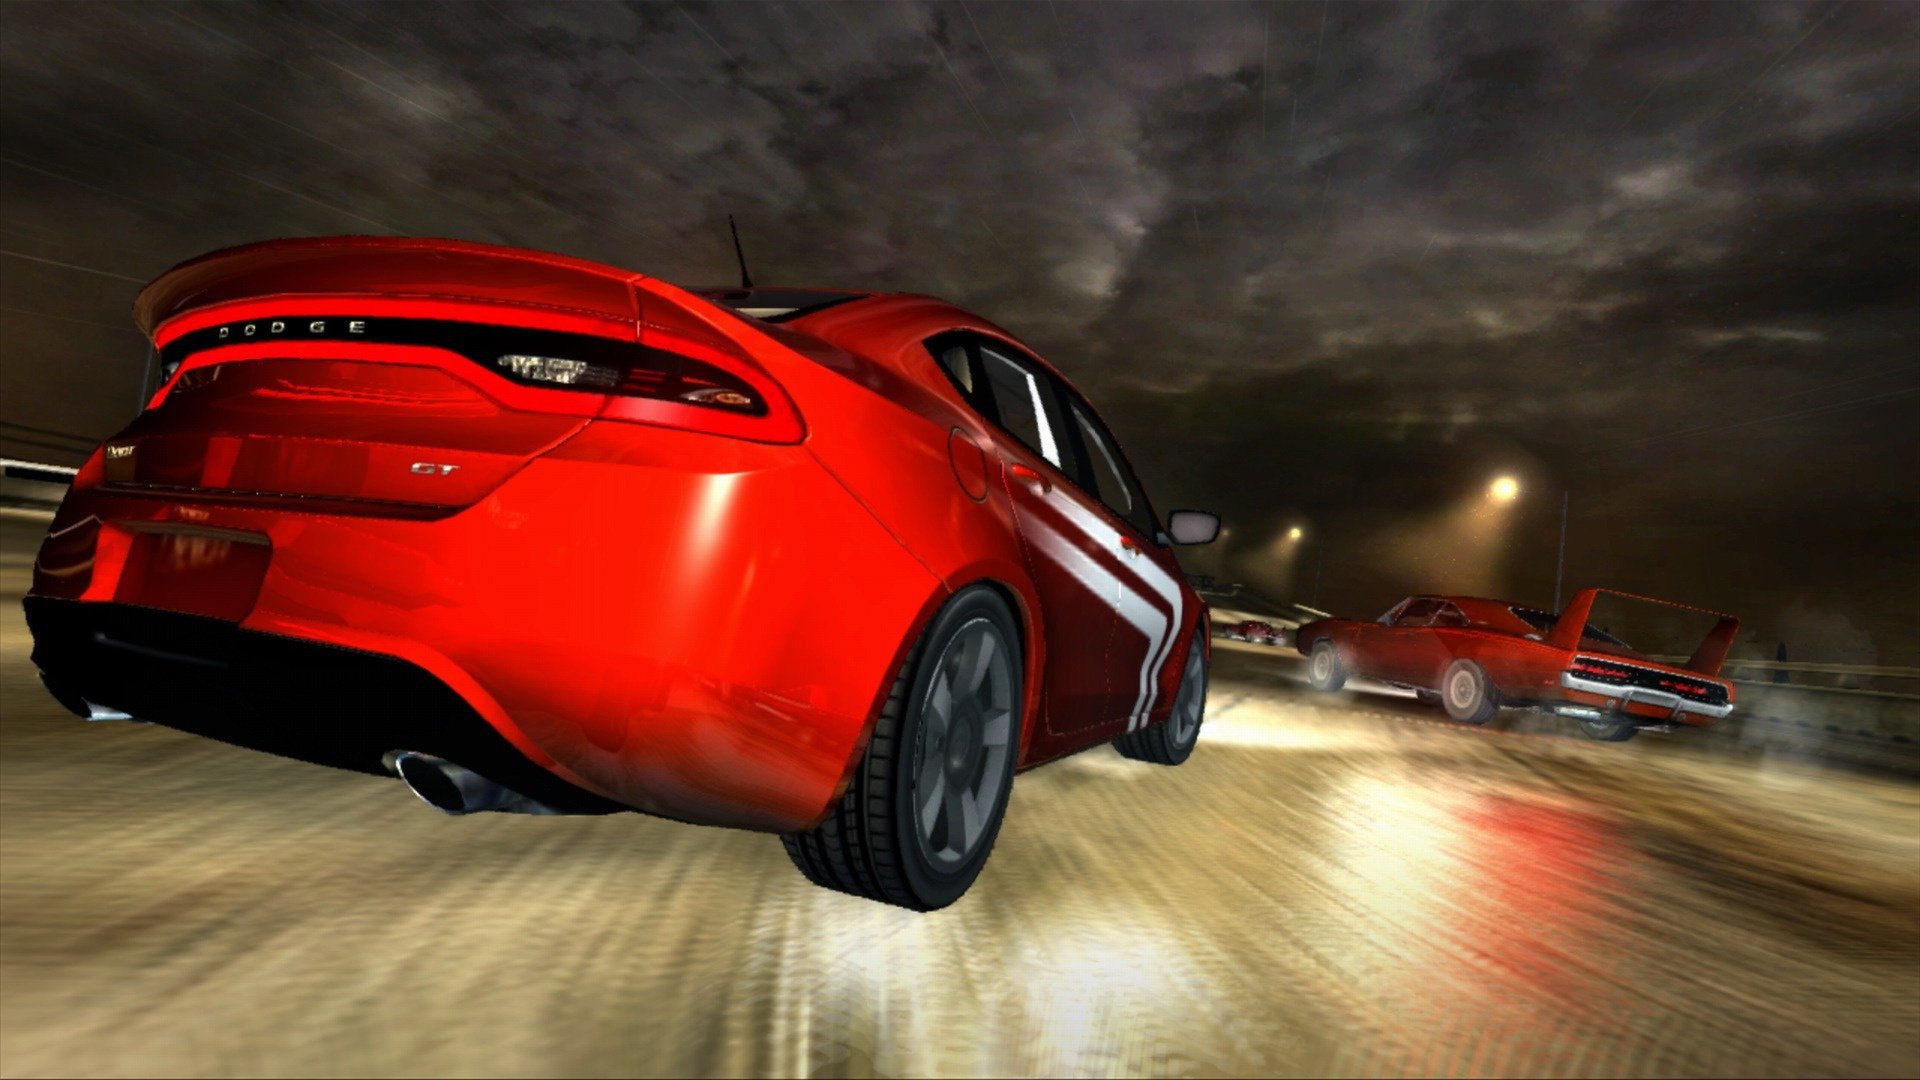 Fast & Furious: Showdown (Wii U) Game Profile | News, Reviews, Videos